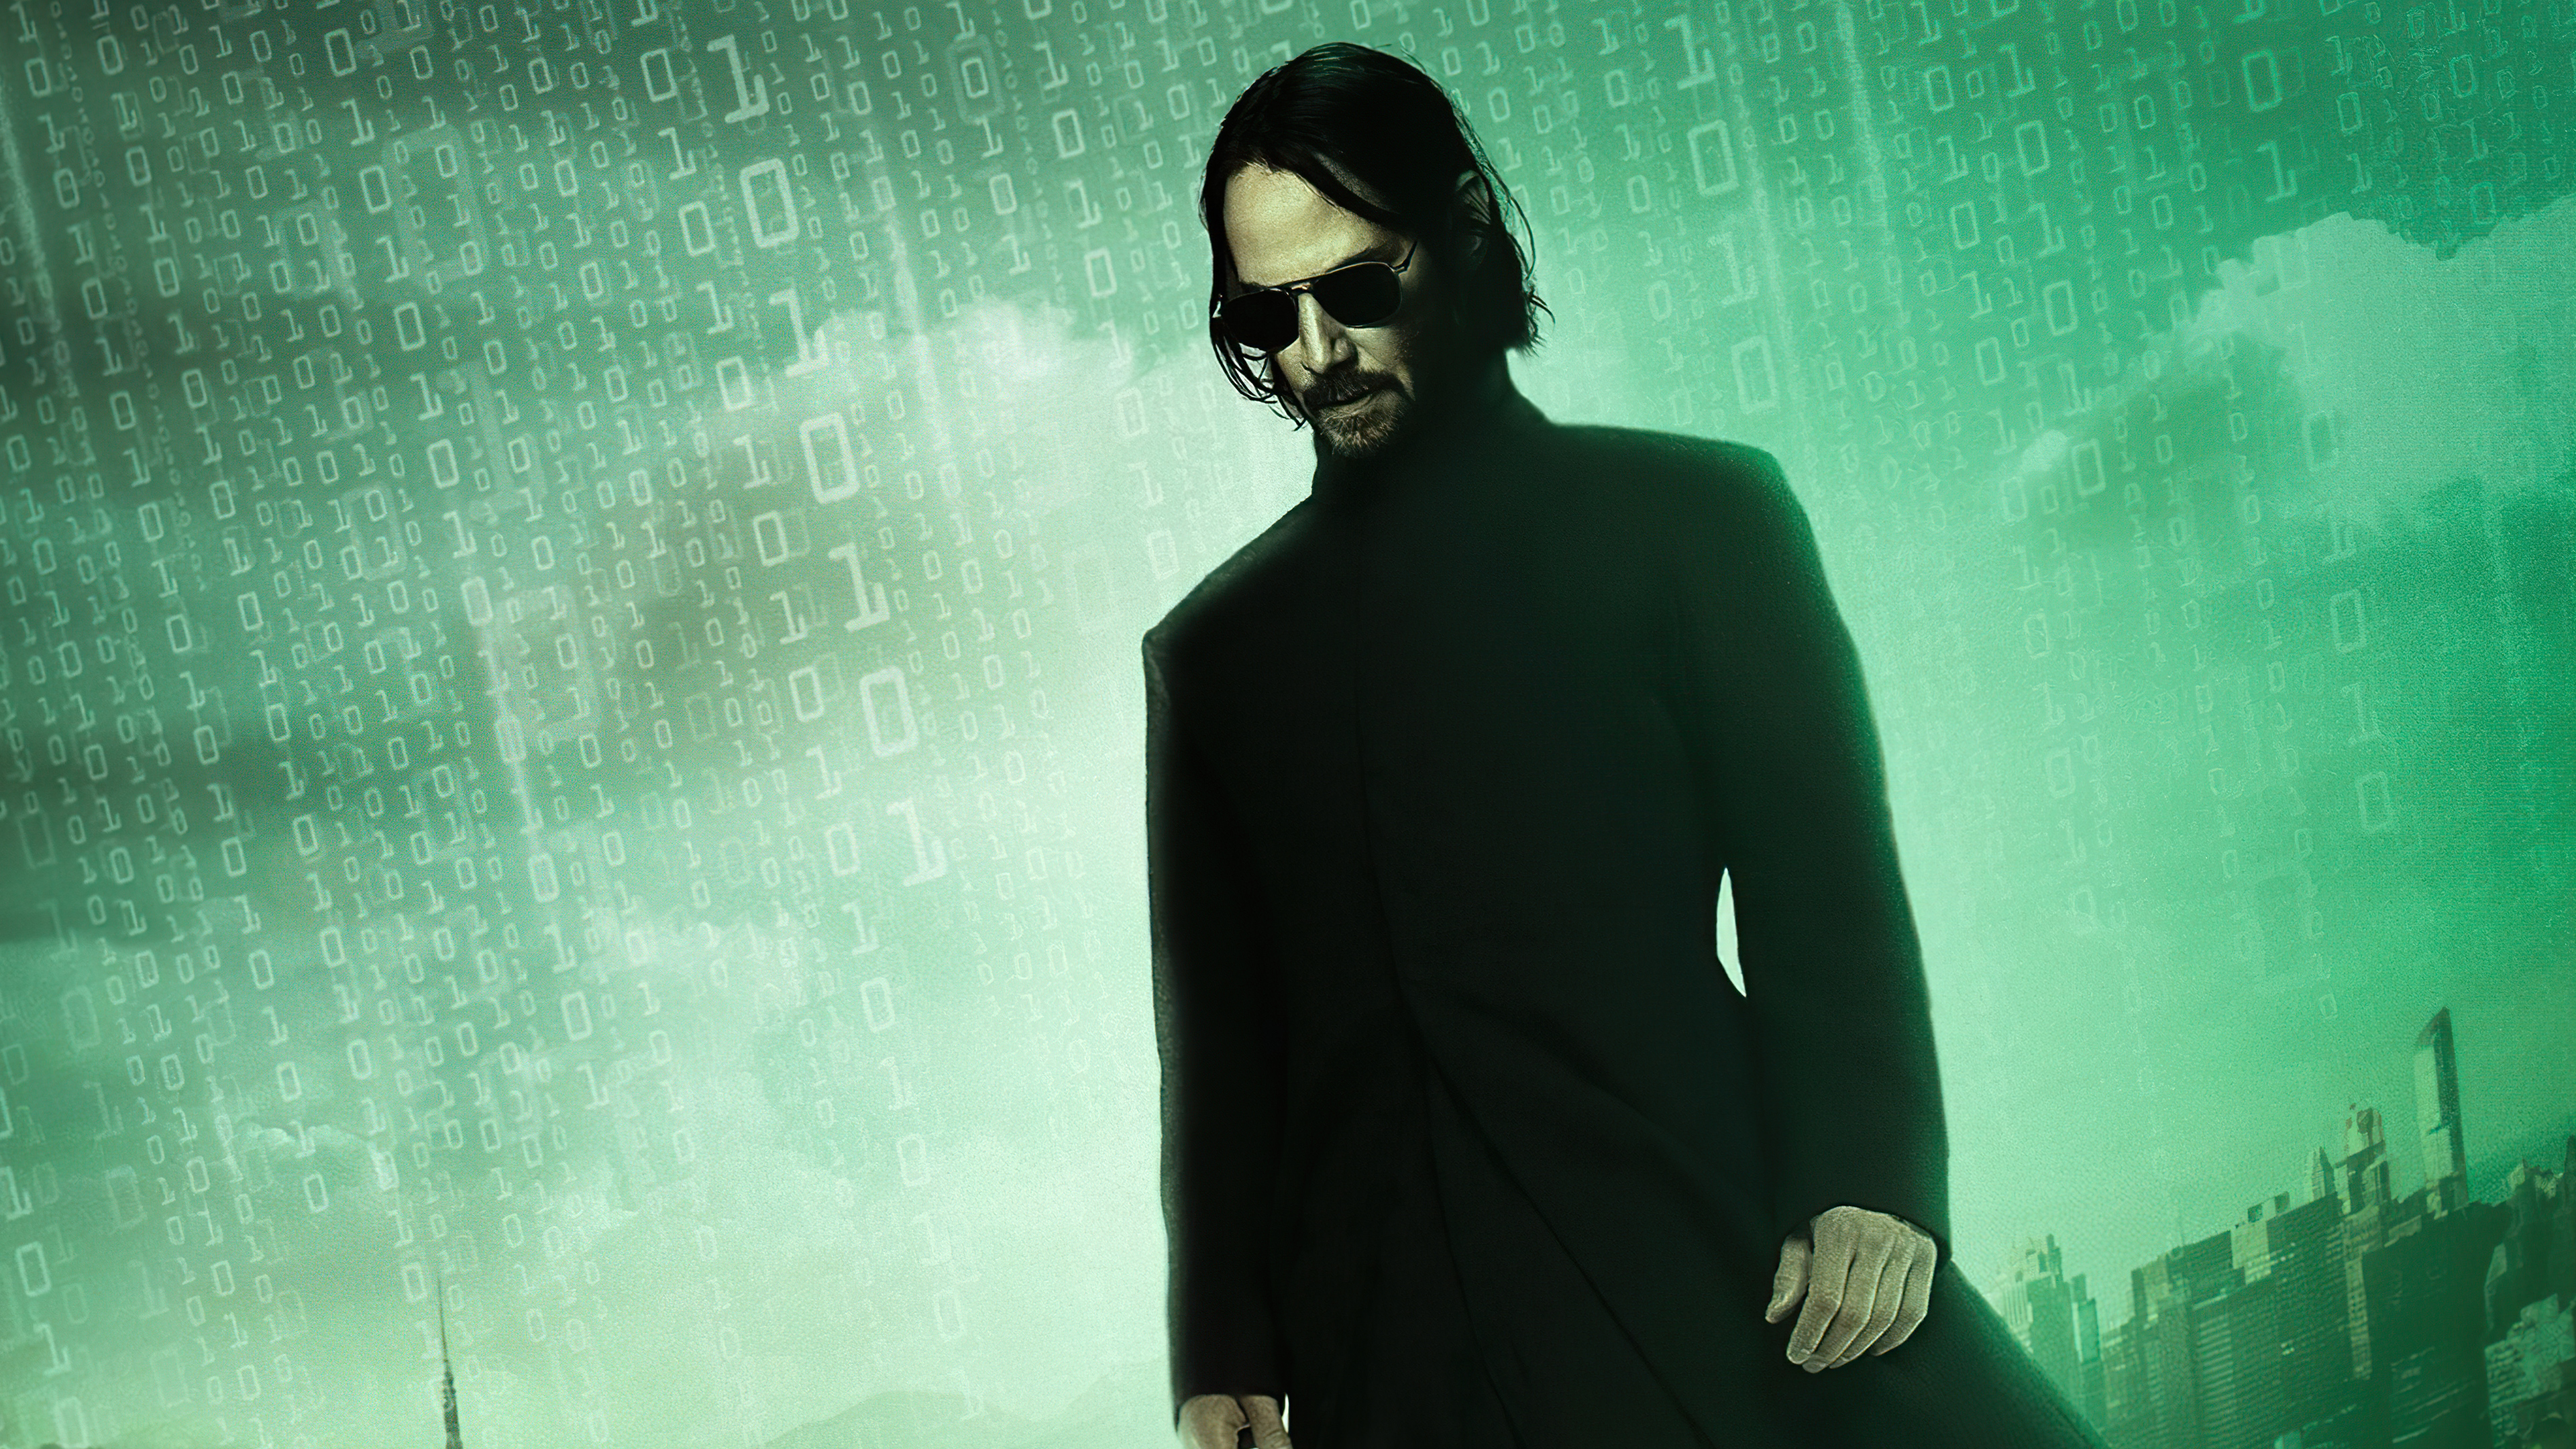 The Matrix 4K Wallpapers